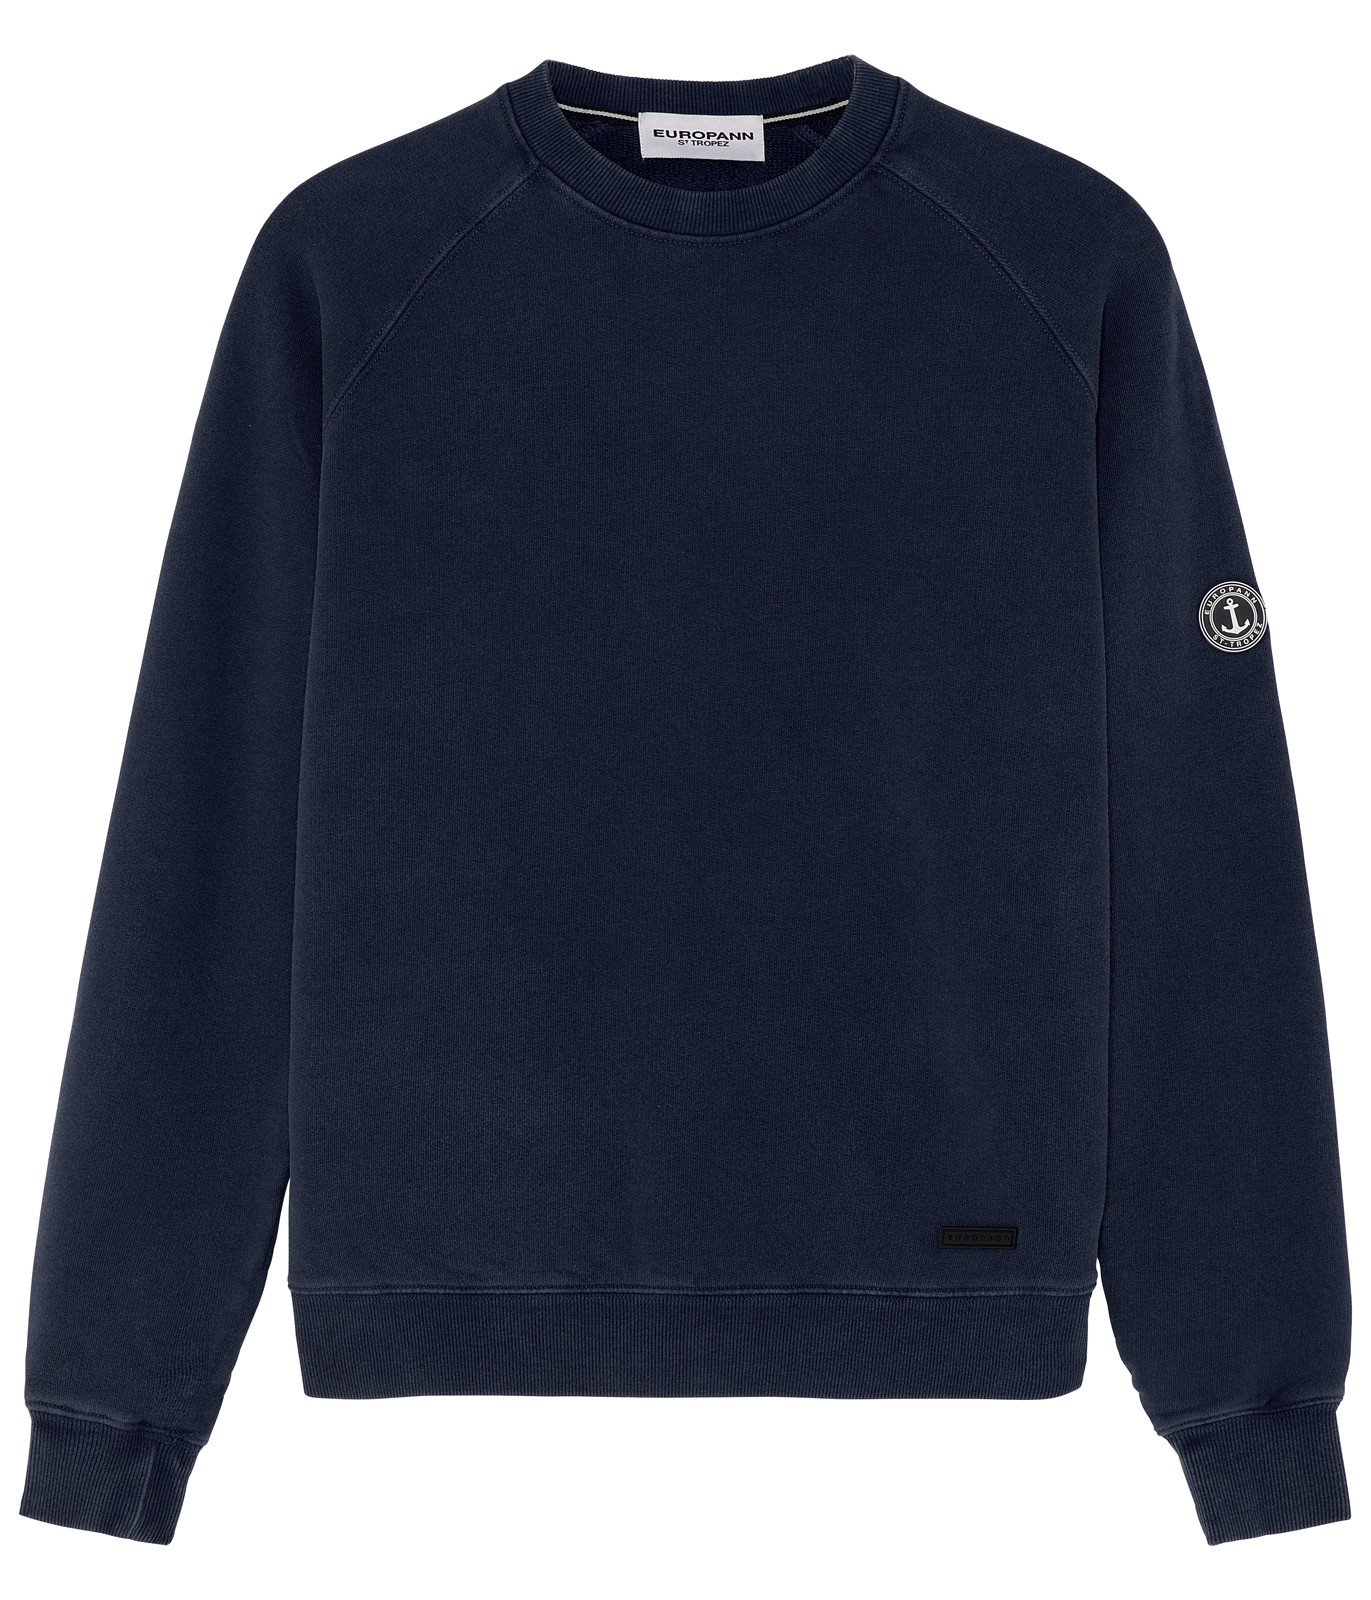 Men's plain fleece sweatshirt with long sleeves Quality brand Europann